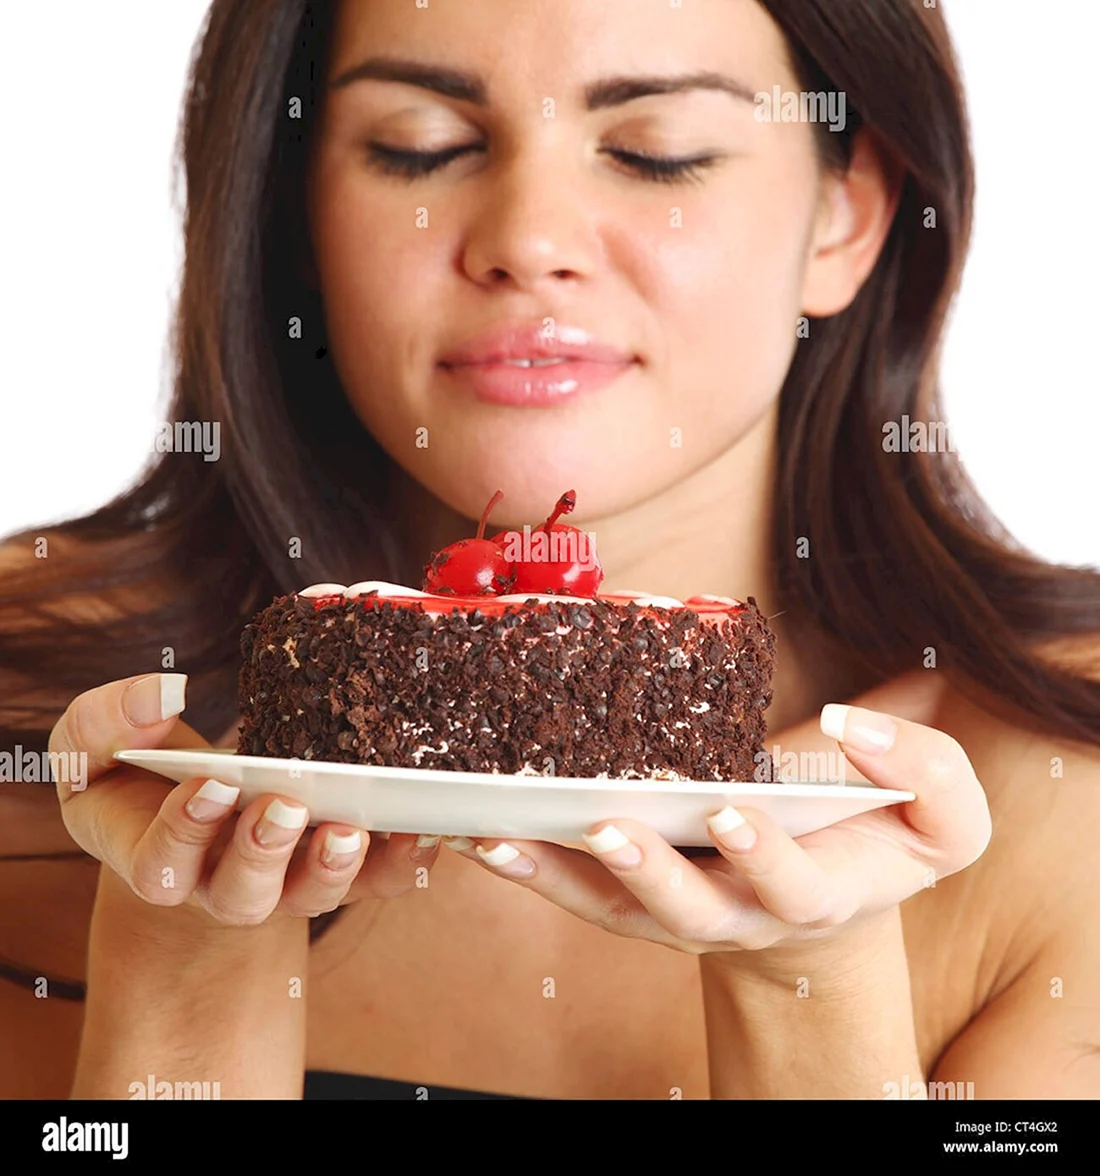 Тортик для девушки